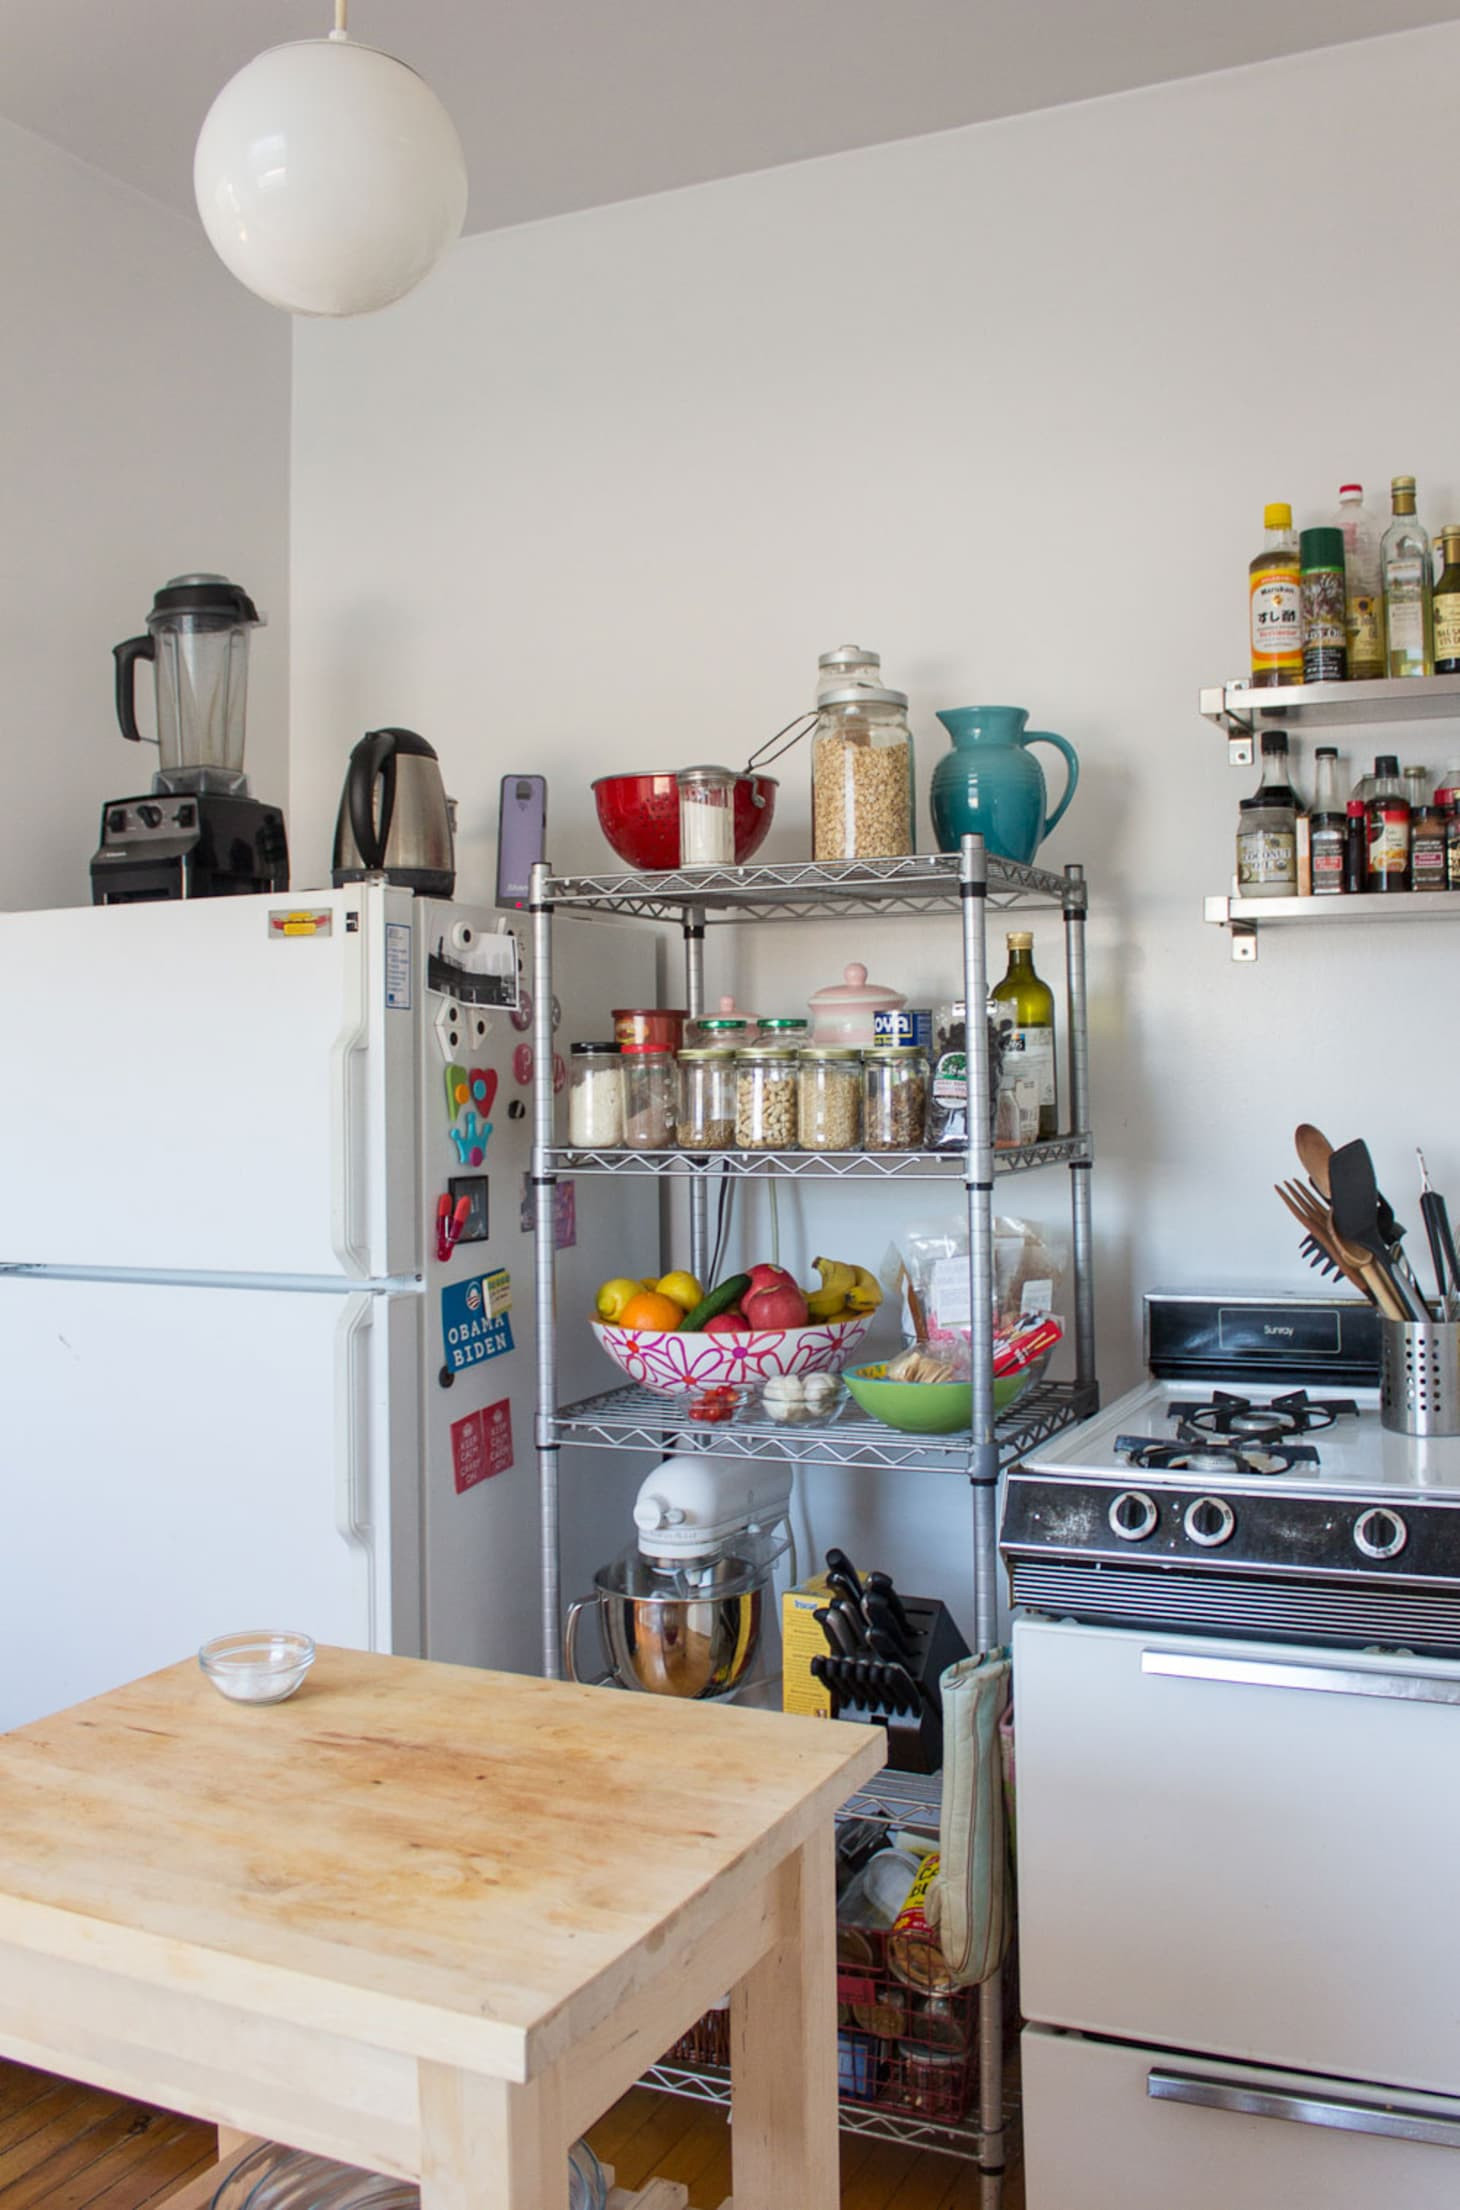 Storage Idea For Kitchen
 The 21 Best Storage Ideas for Small Kitchens